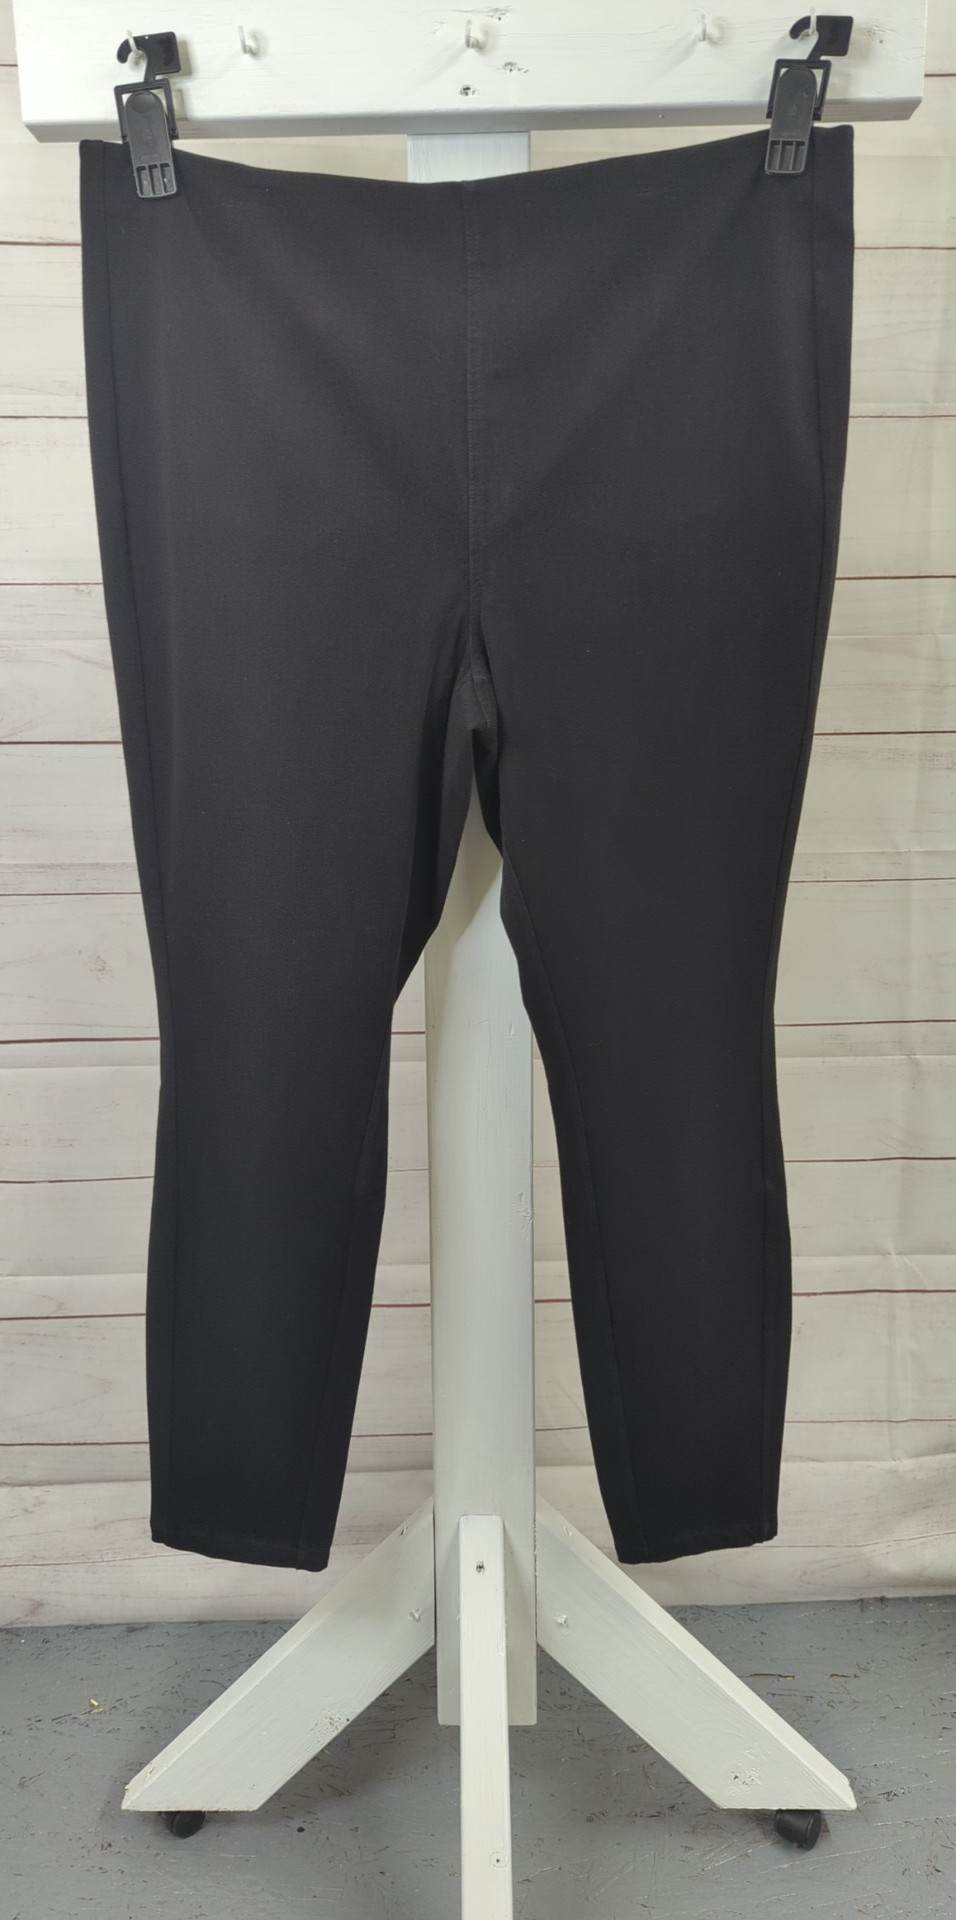 XLARGE BLACK A518991 Encore by Idina Menzel Regular Knit Denim Legging